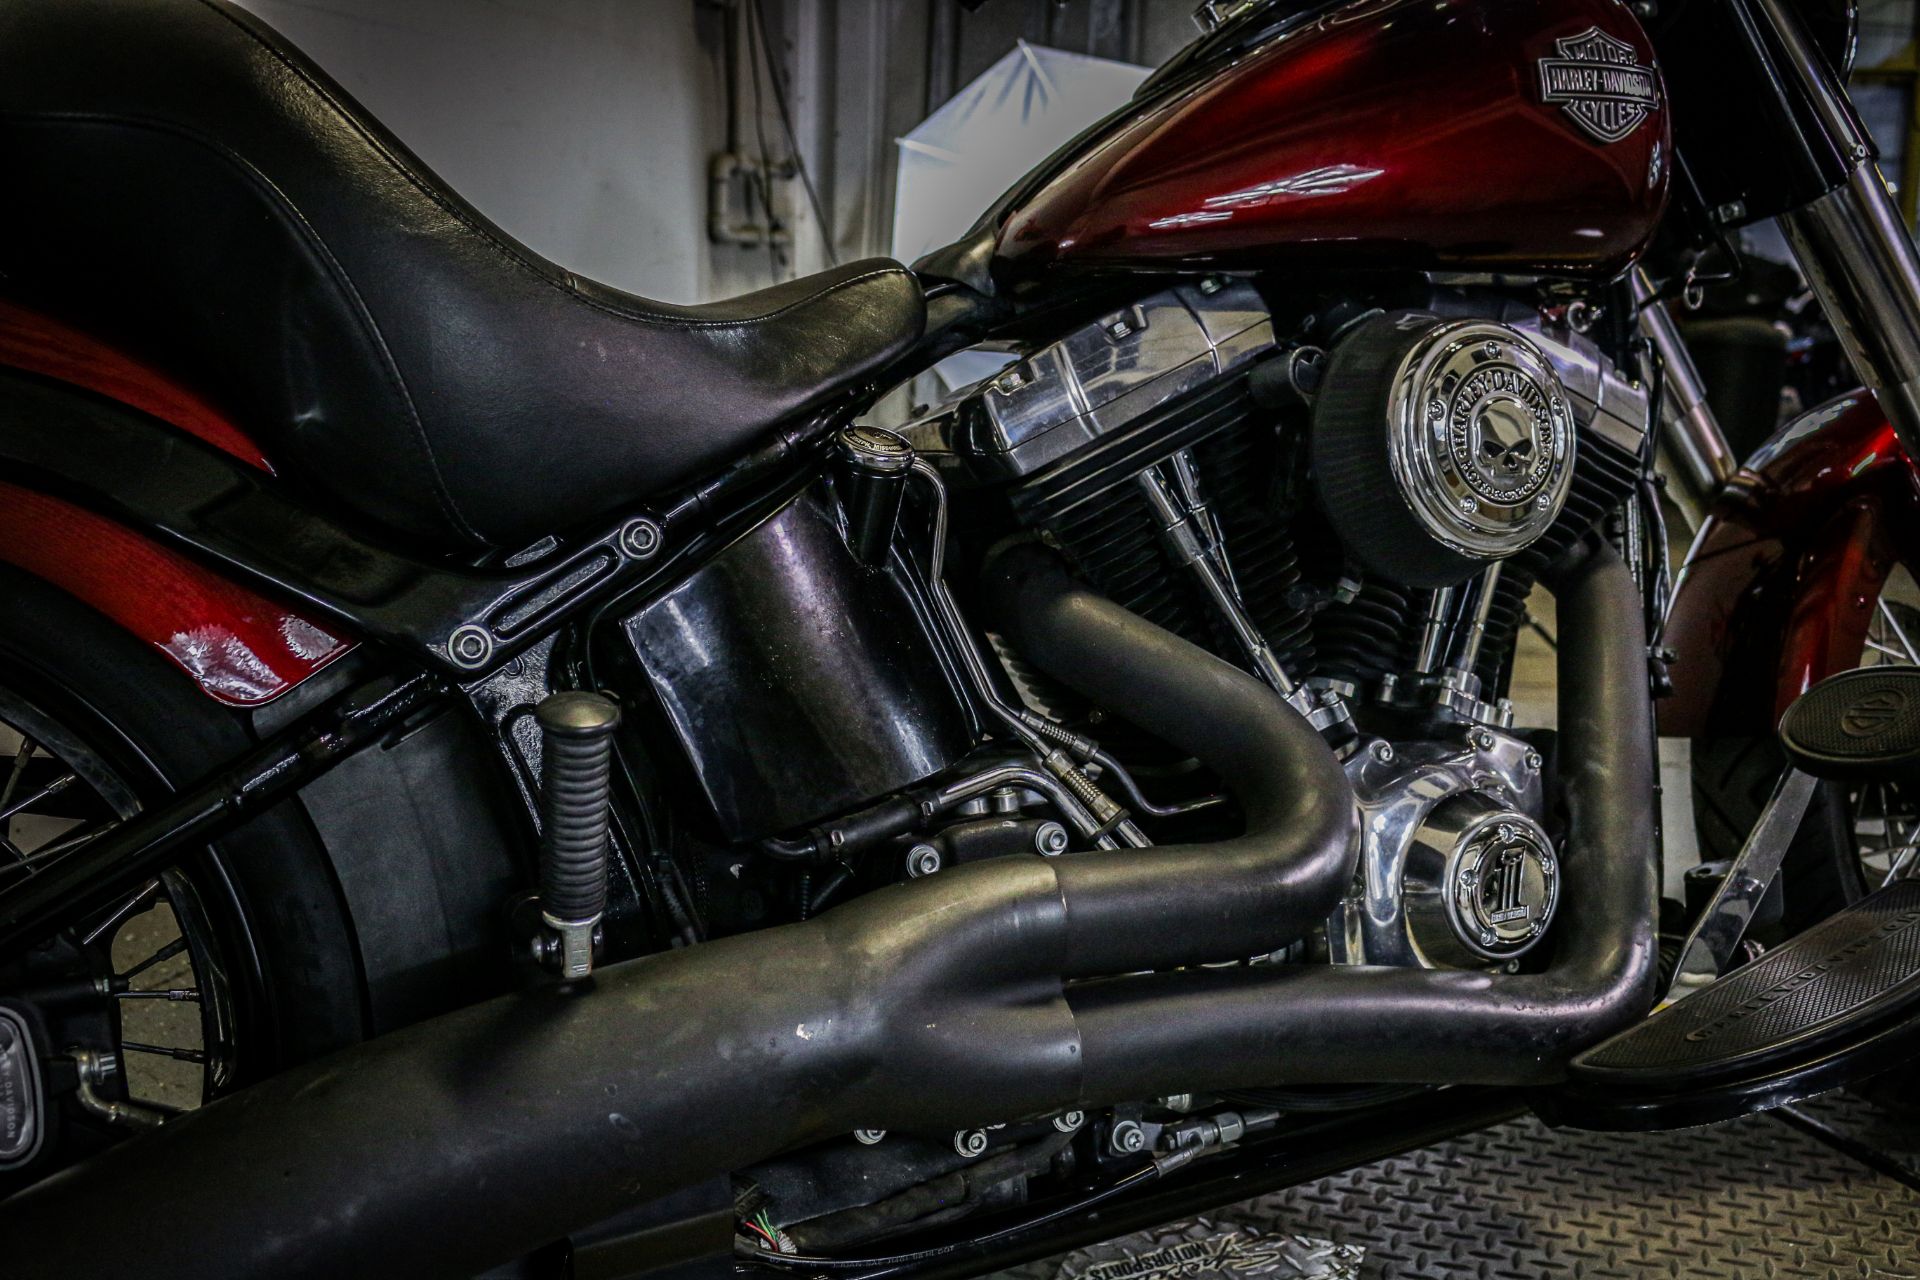 2014 Harley-Davidson Softail Slim® in Sacramento, California - Photo 10